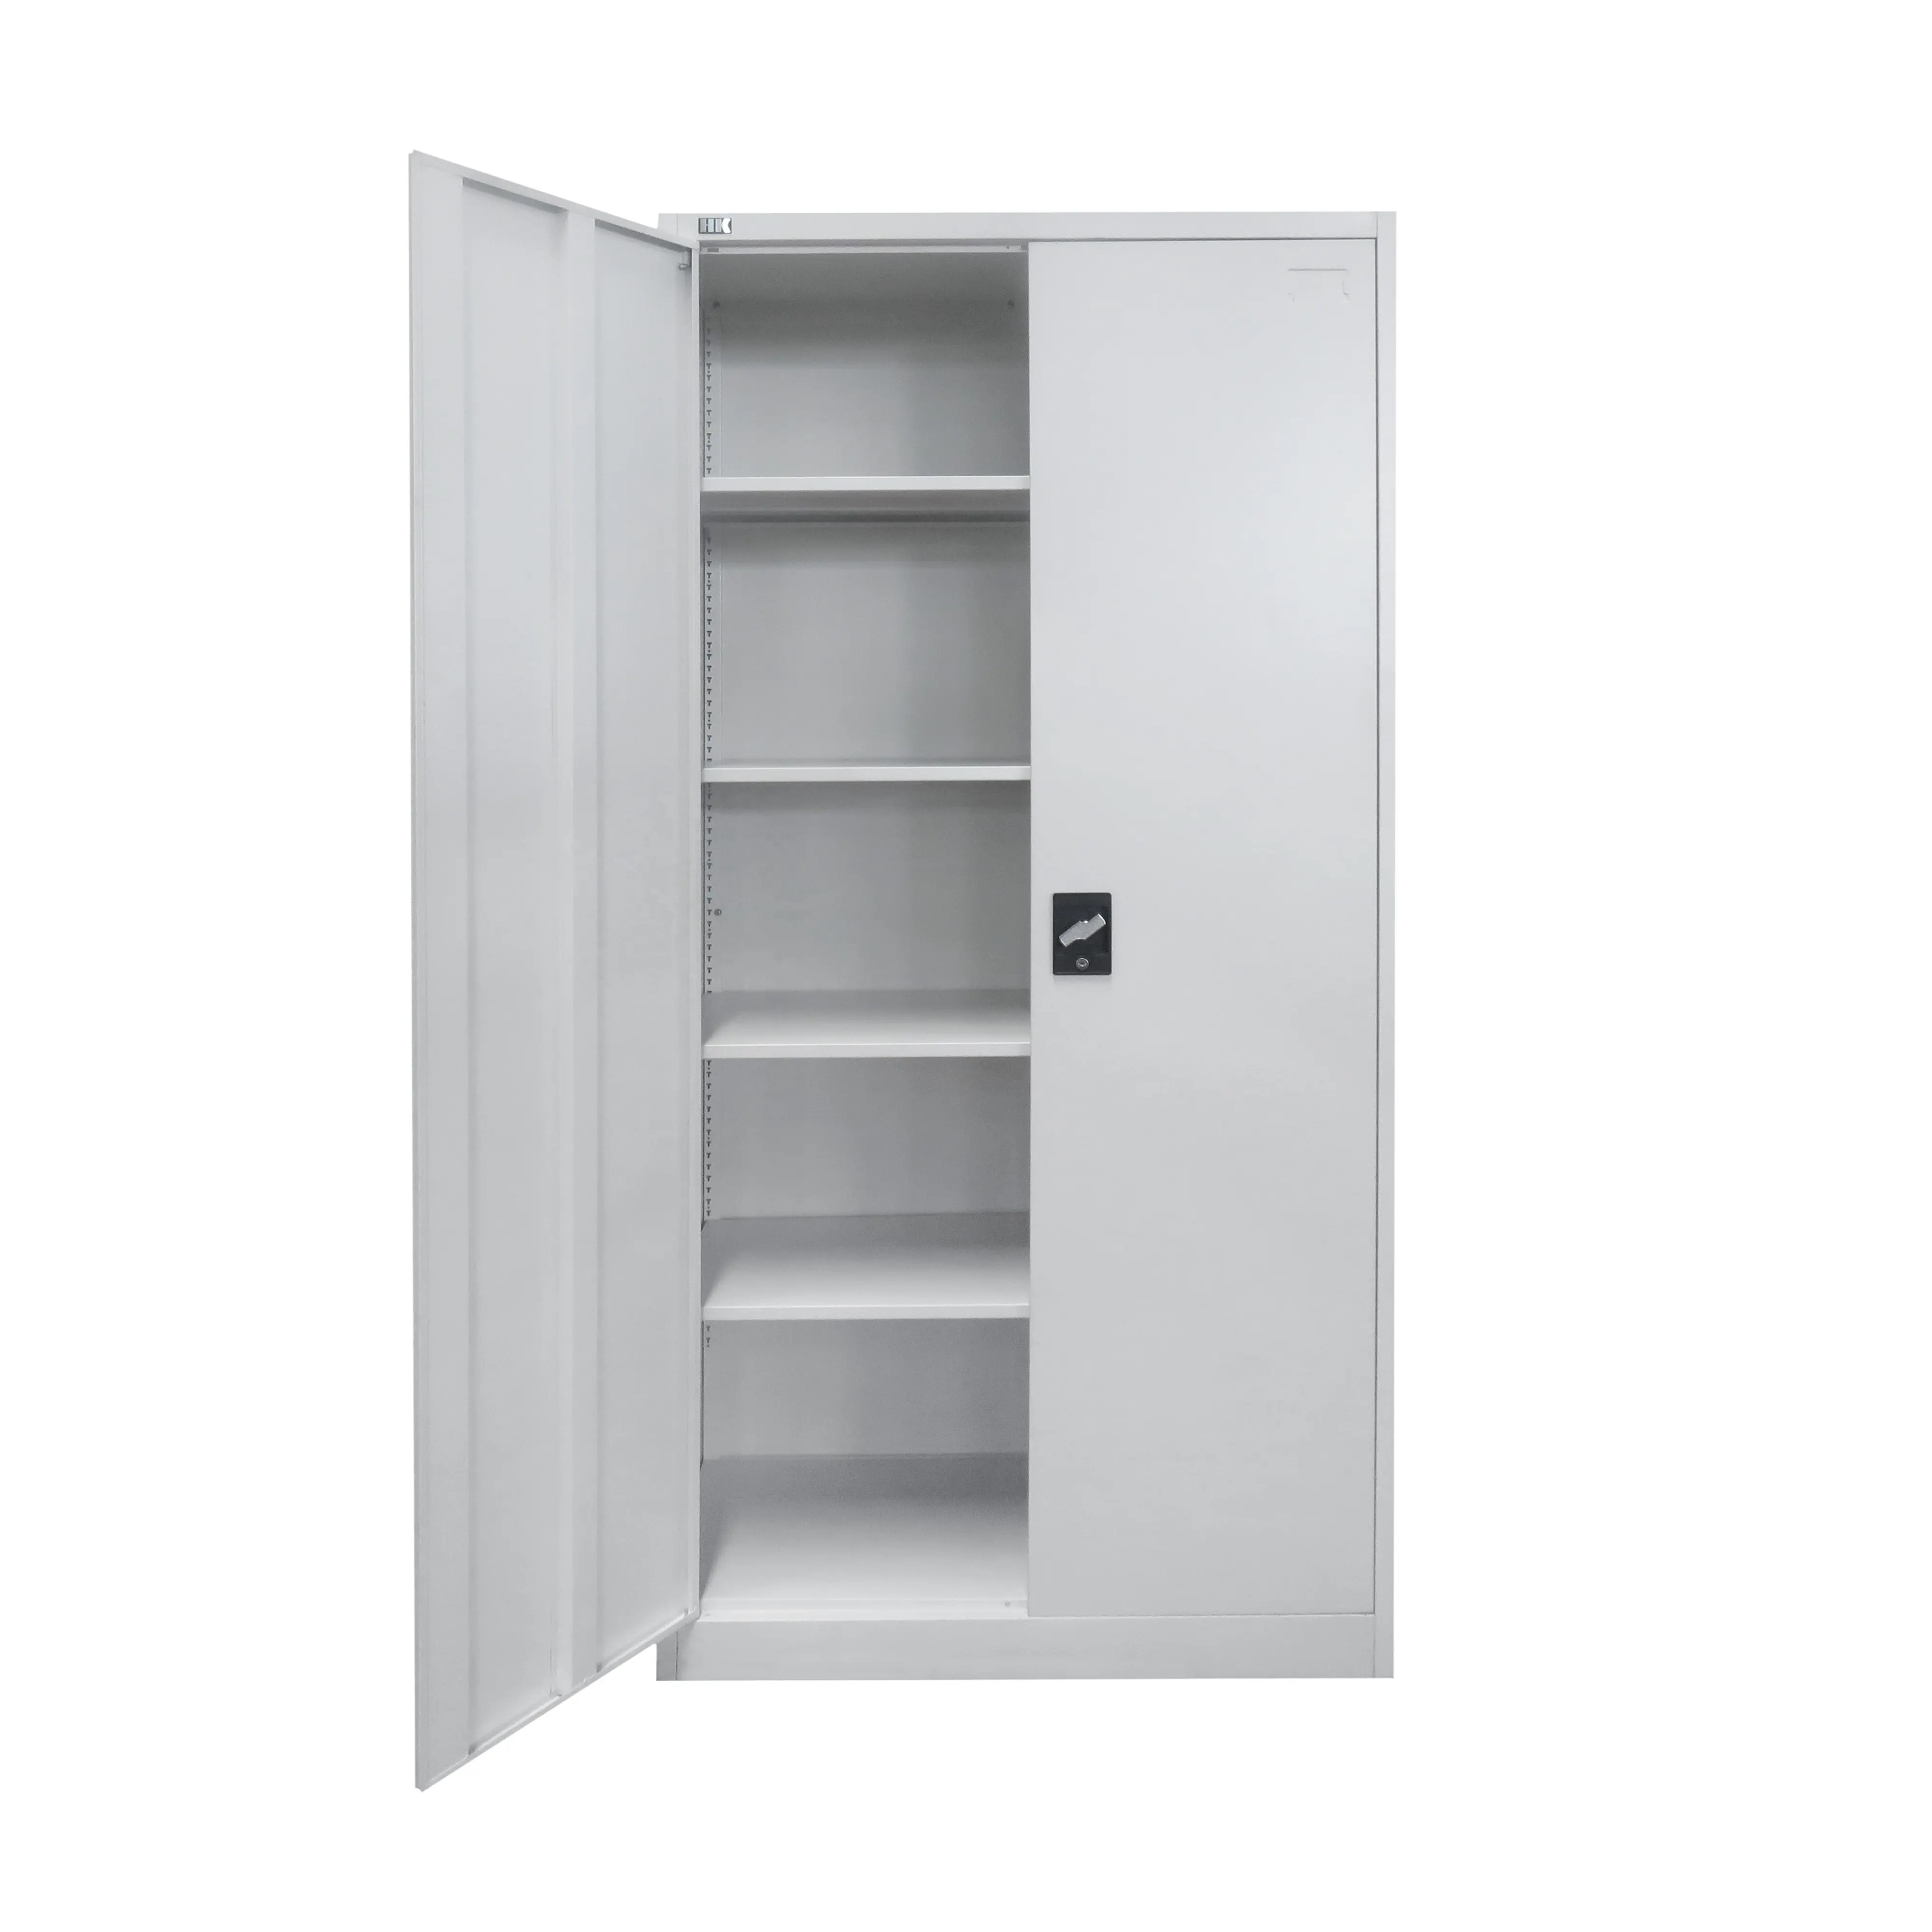 Storage Steel Cupboard Locker Knock down Folding storage for dressing clothes wardrobe two door steel Cupboard filing cabinet